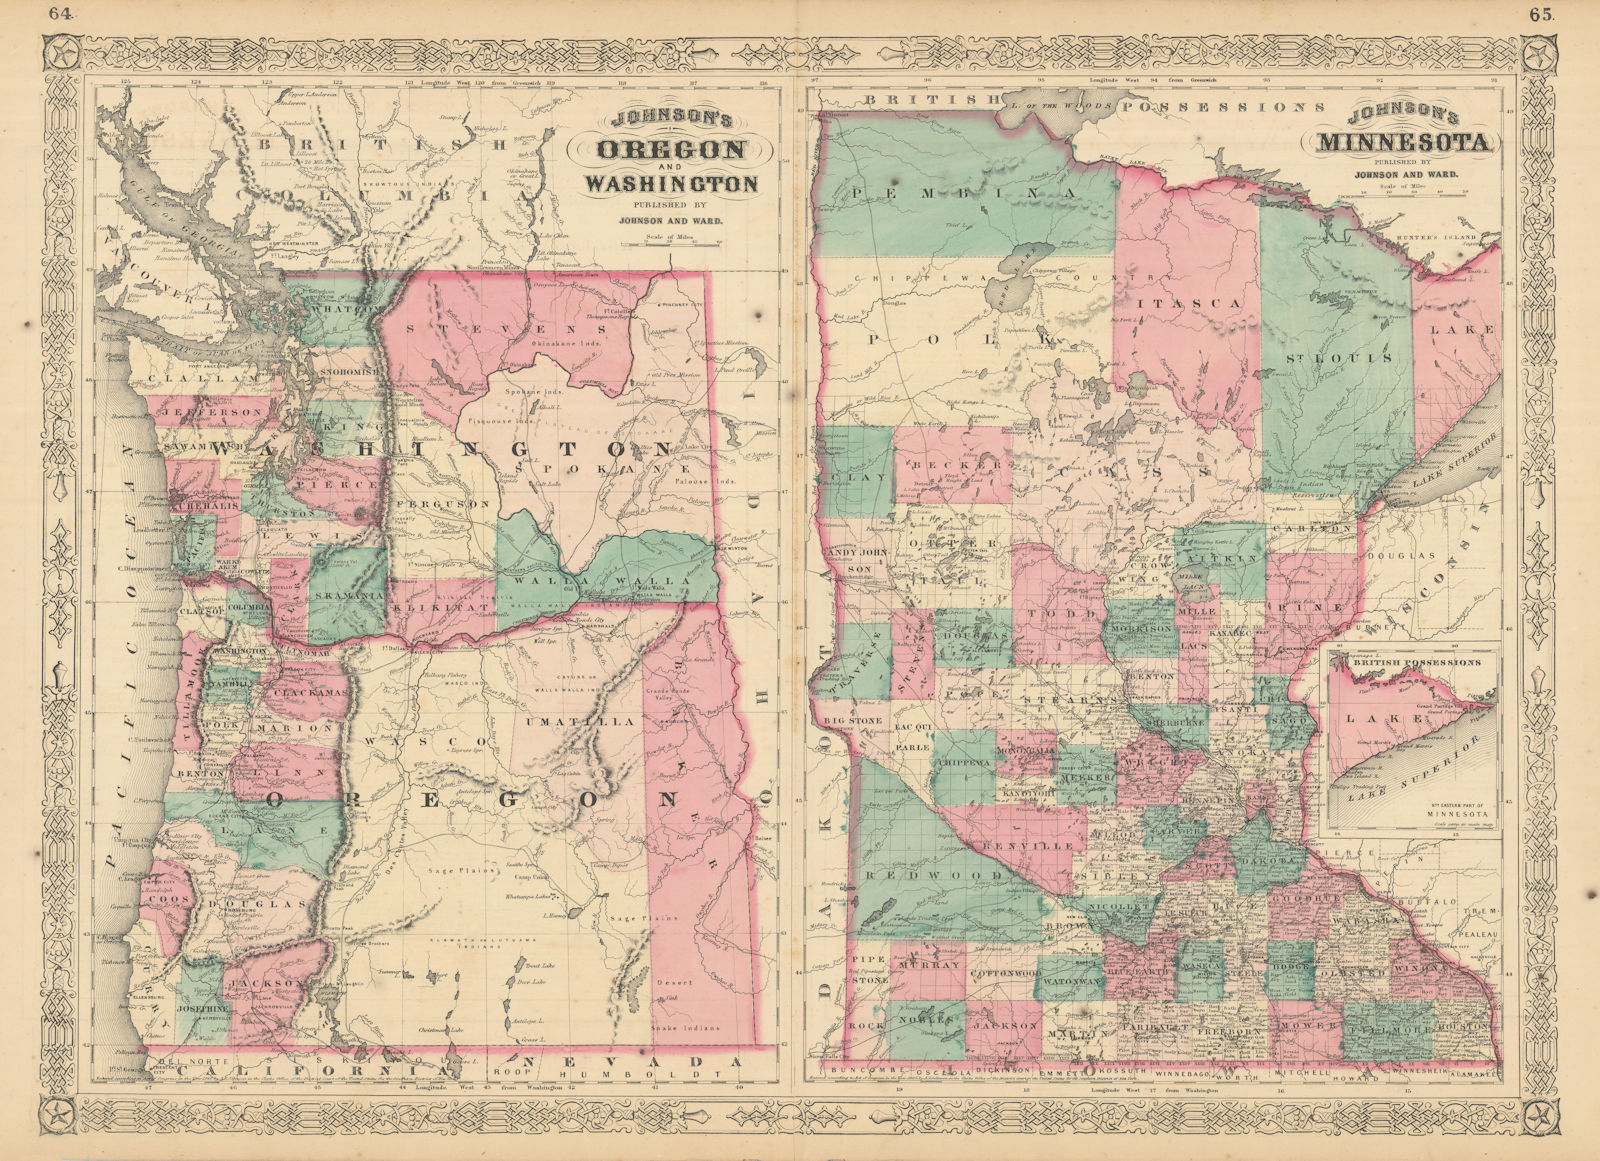 Johnson's Oregon, Washington & Minnesota. US state map showing counties 1866